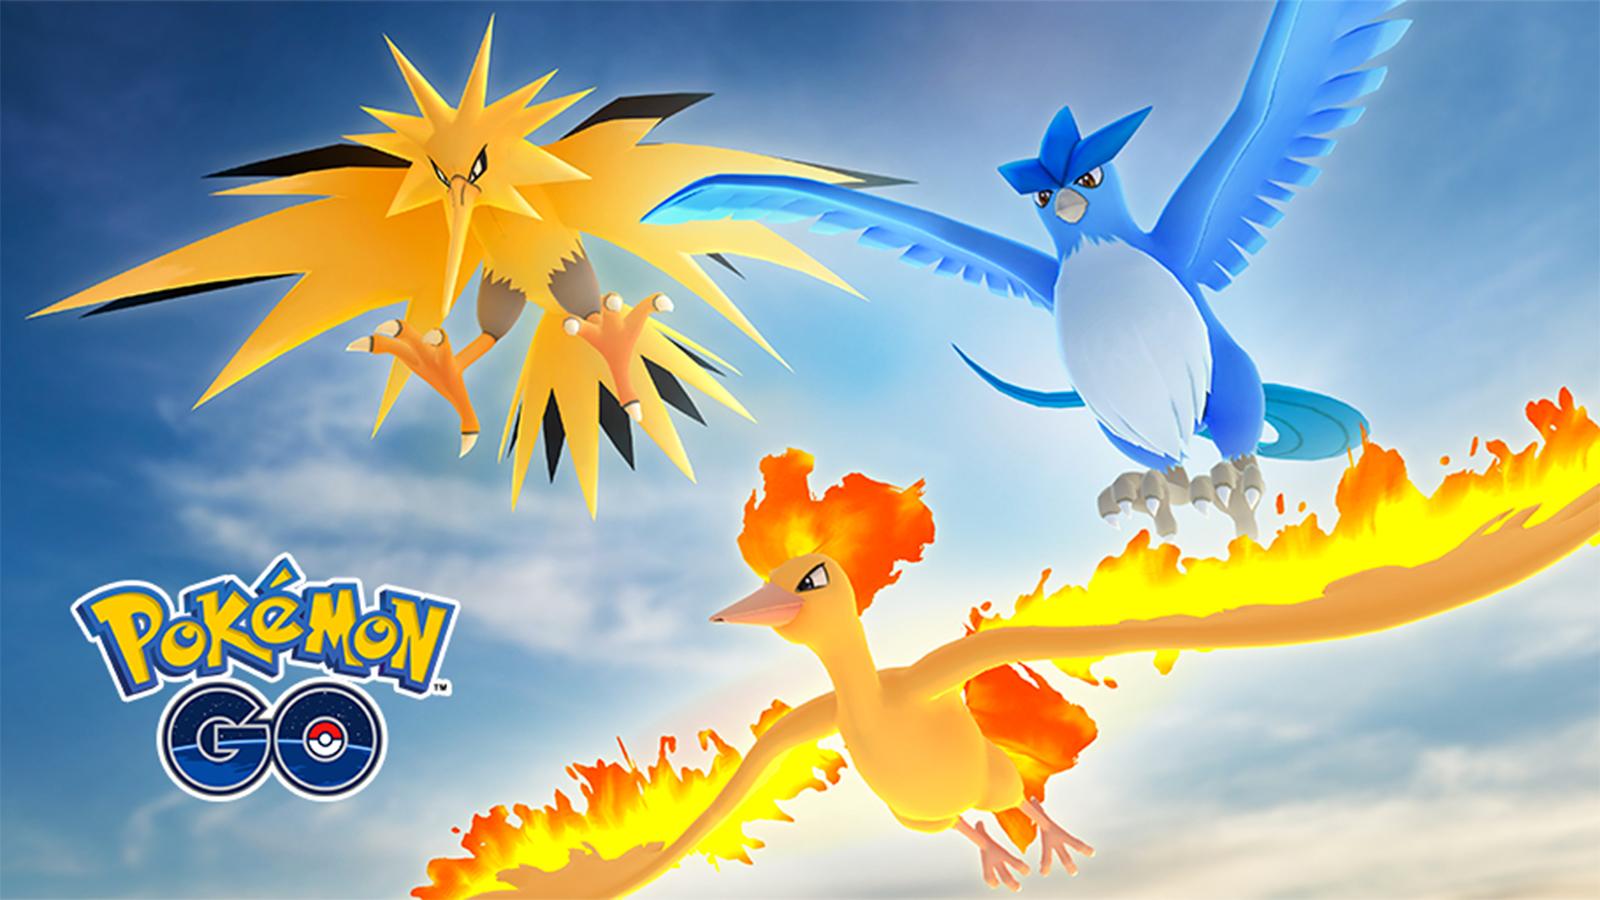 The Legendary Bird trio appearing in Pokemon Go